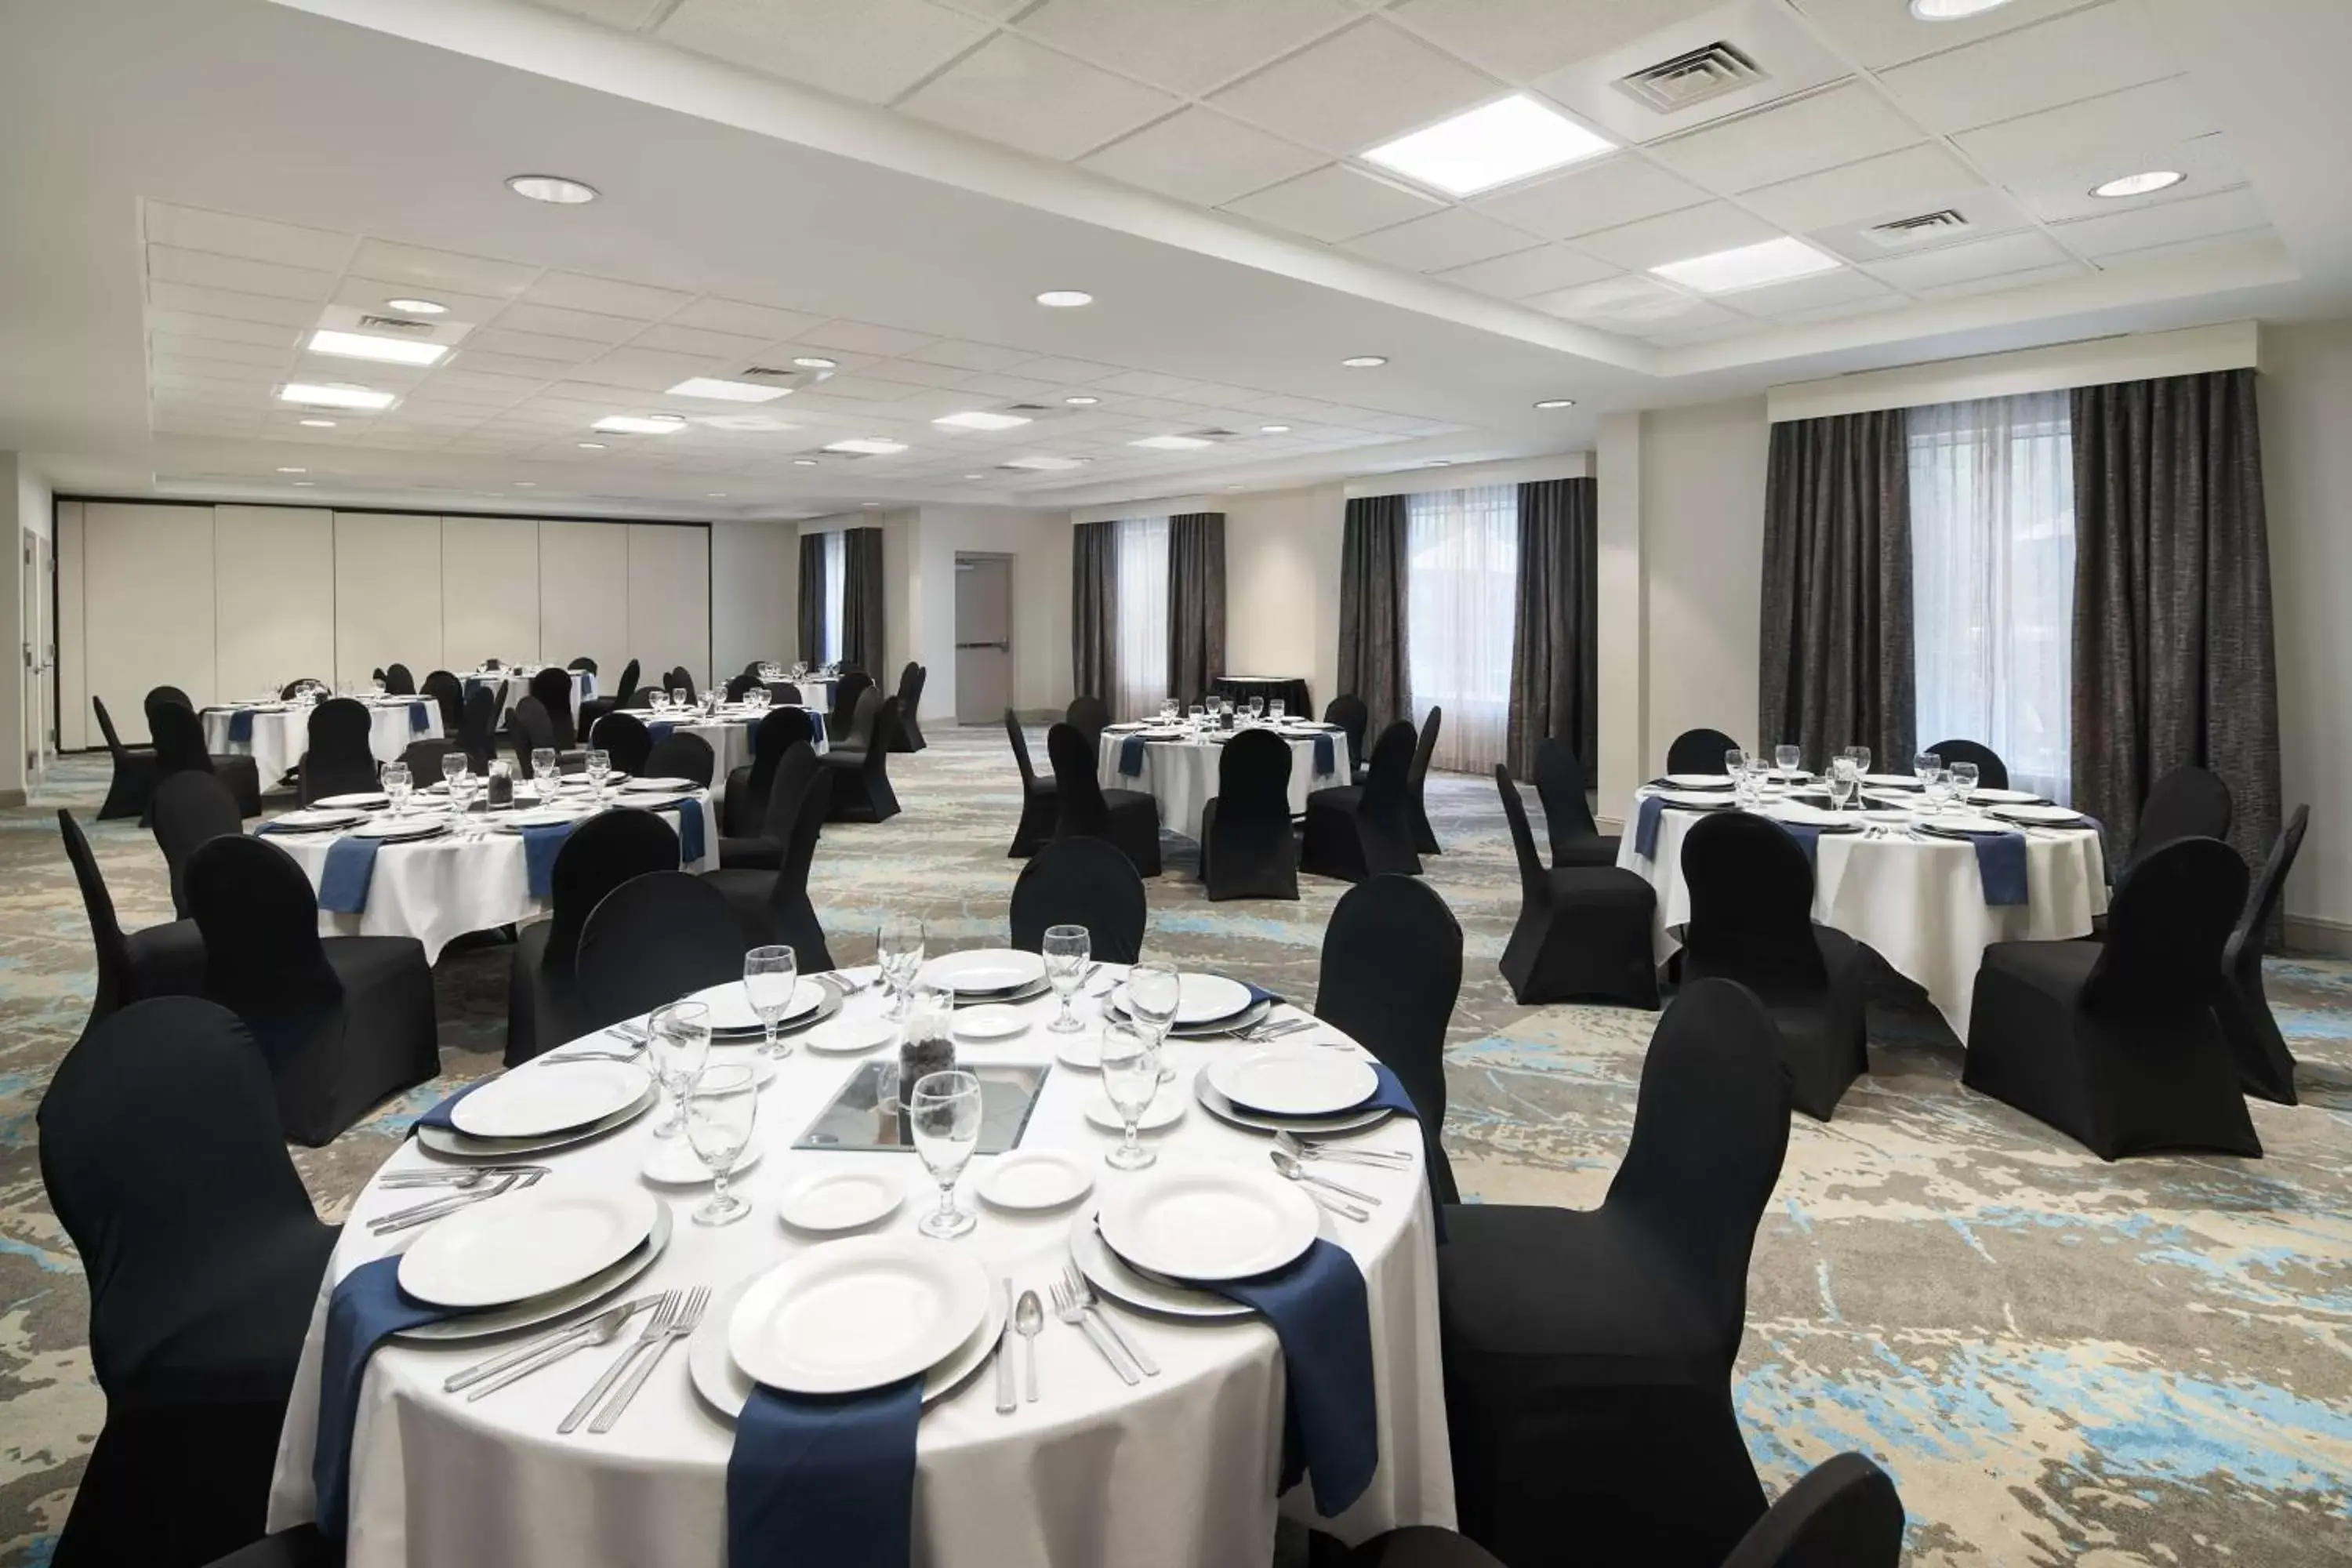 Meeting/conference room, Banquet Facilities in Hilton Garden Inn Columbus